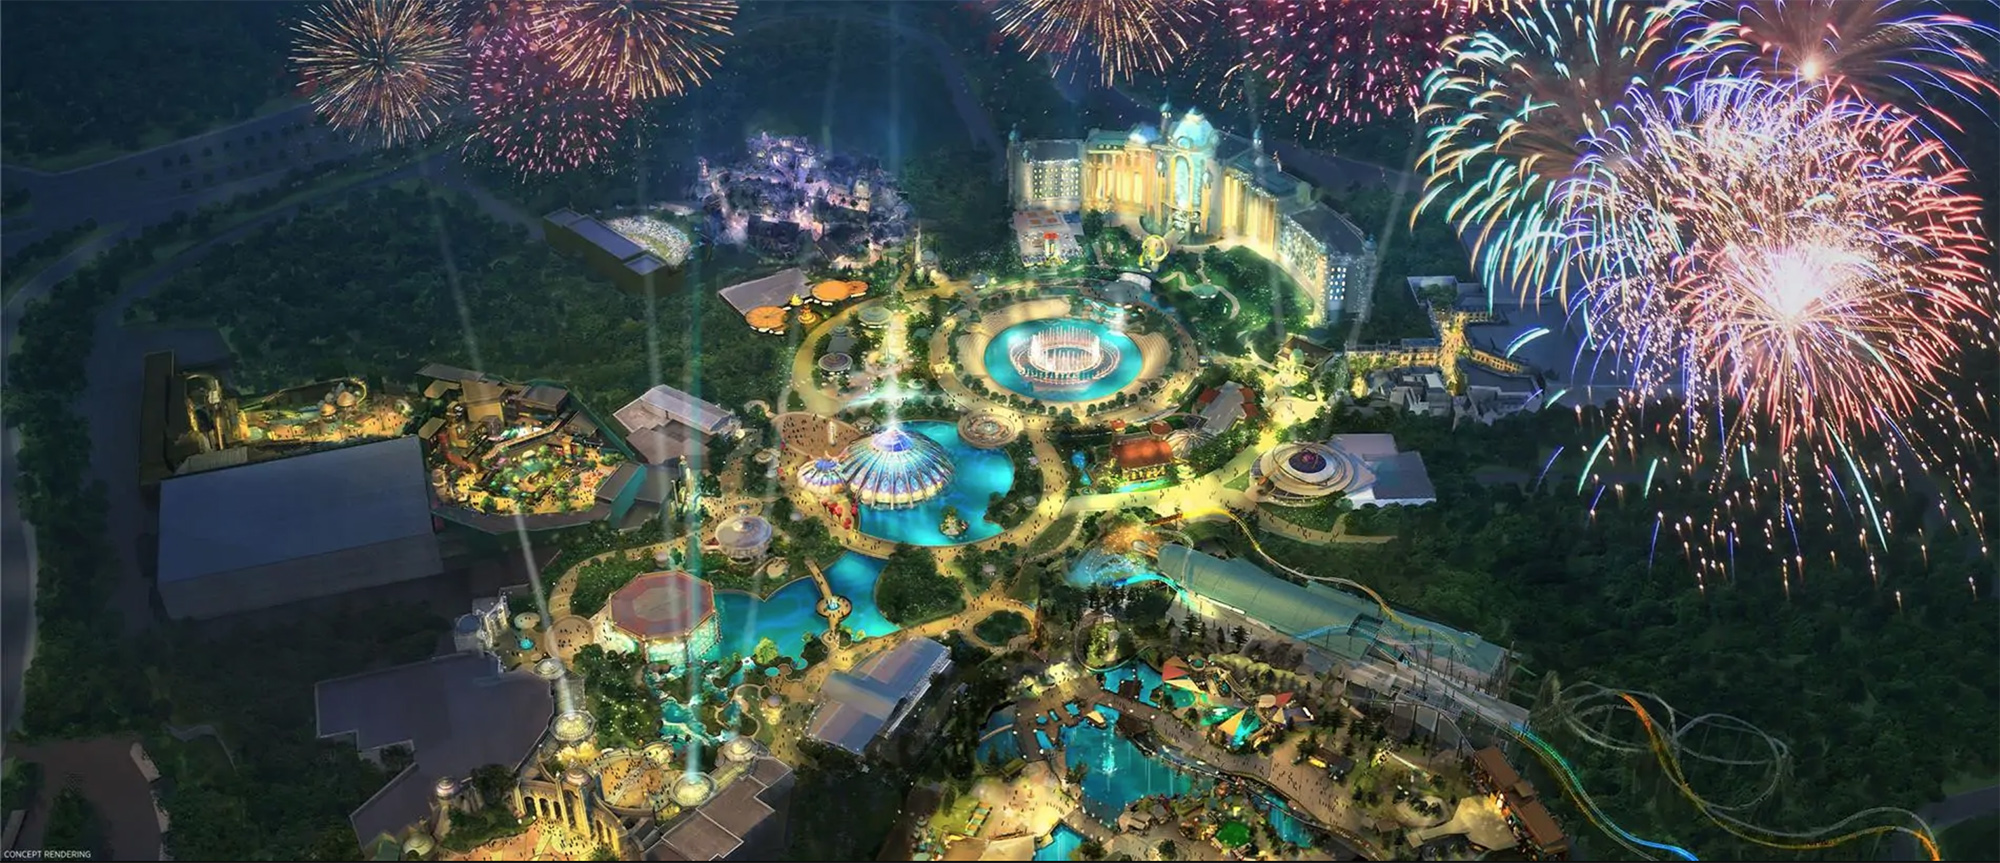 Universal Restarts Epic Universe Construction Disney Tourist Blog - adventure land roblox